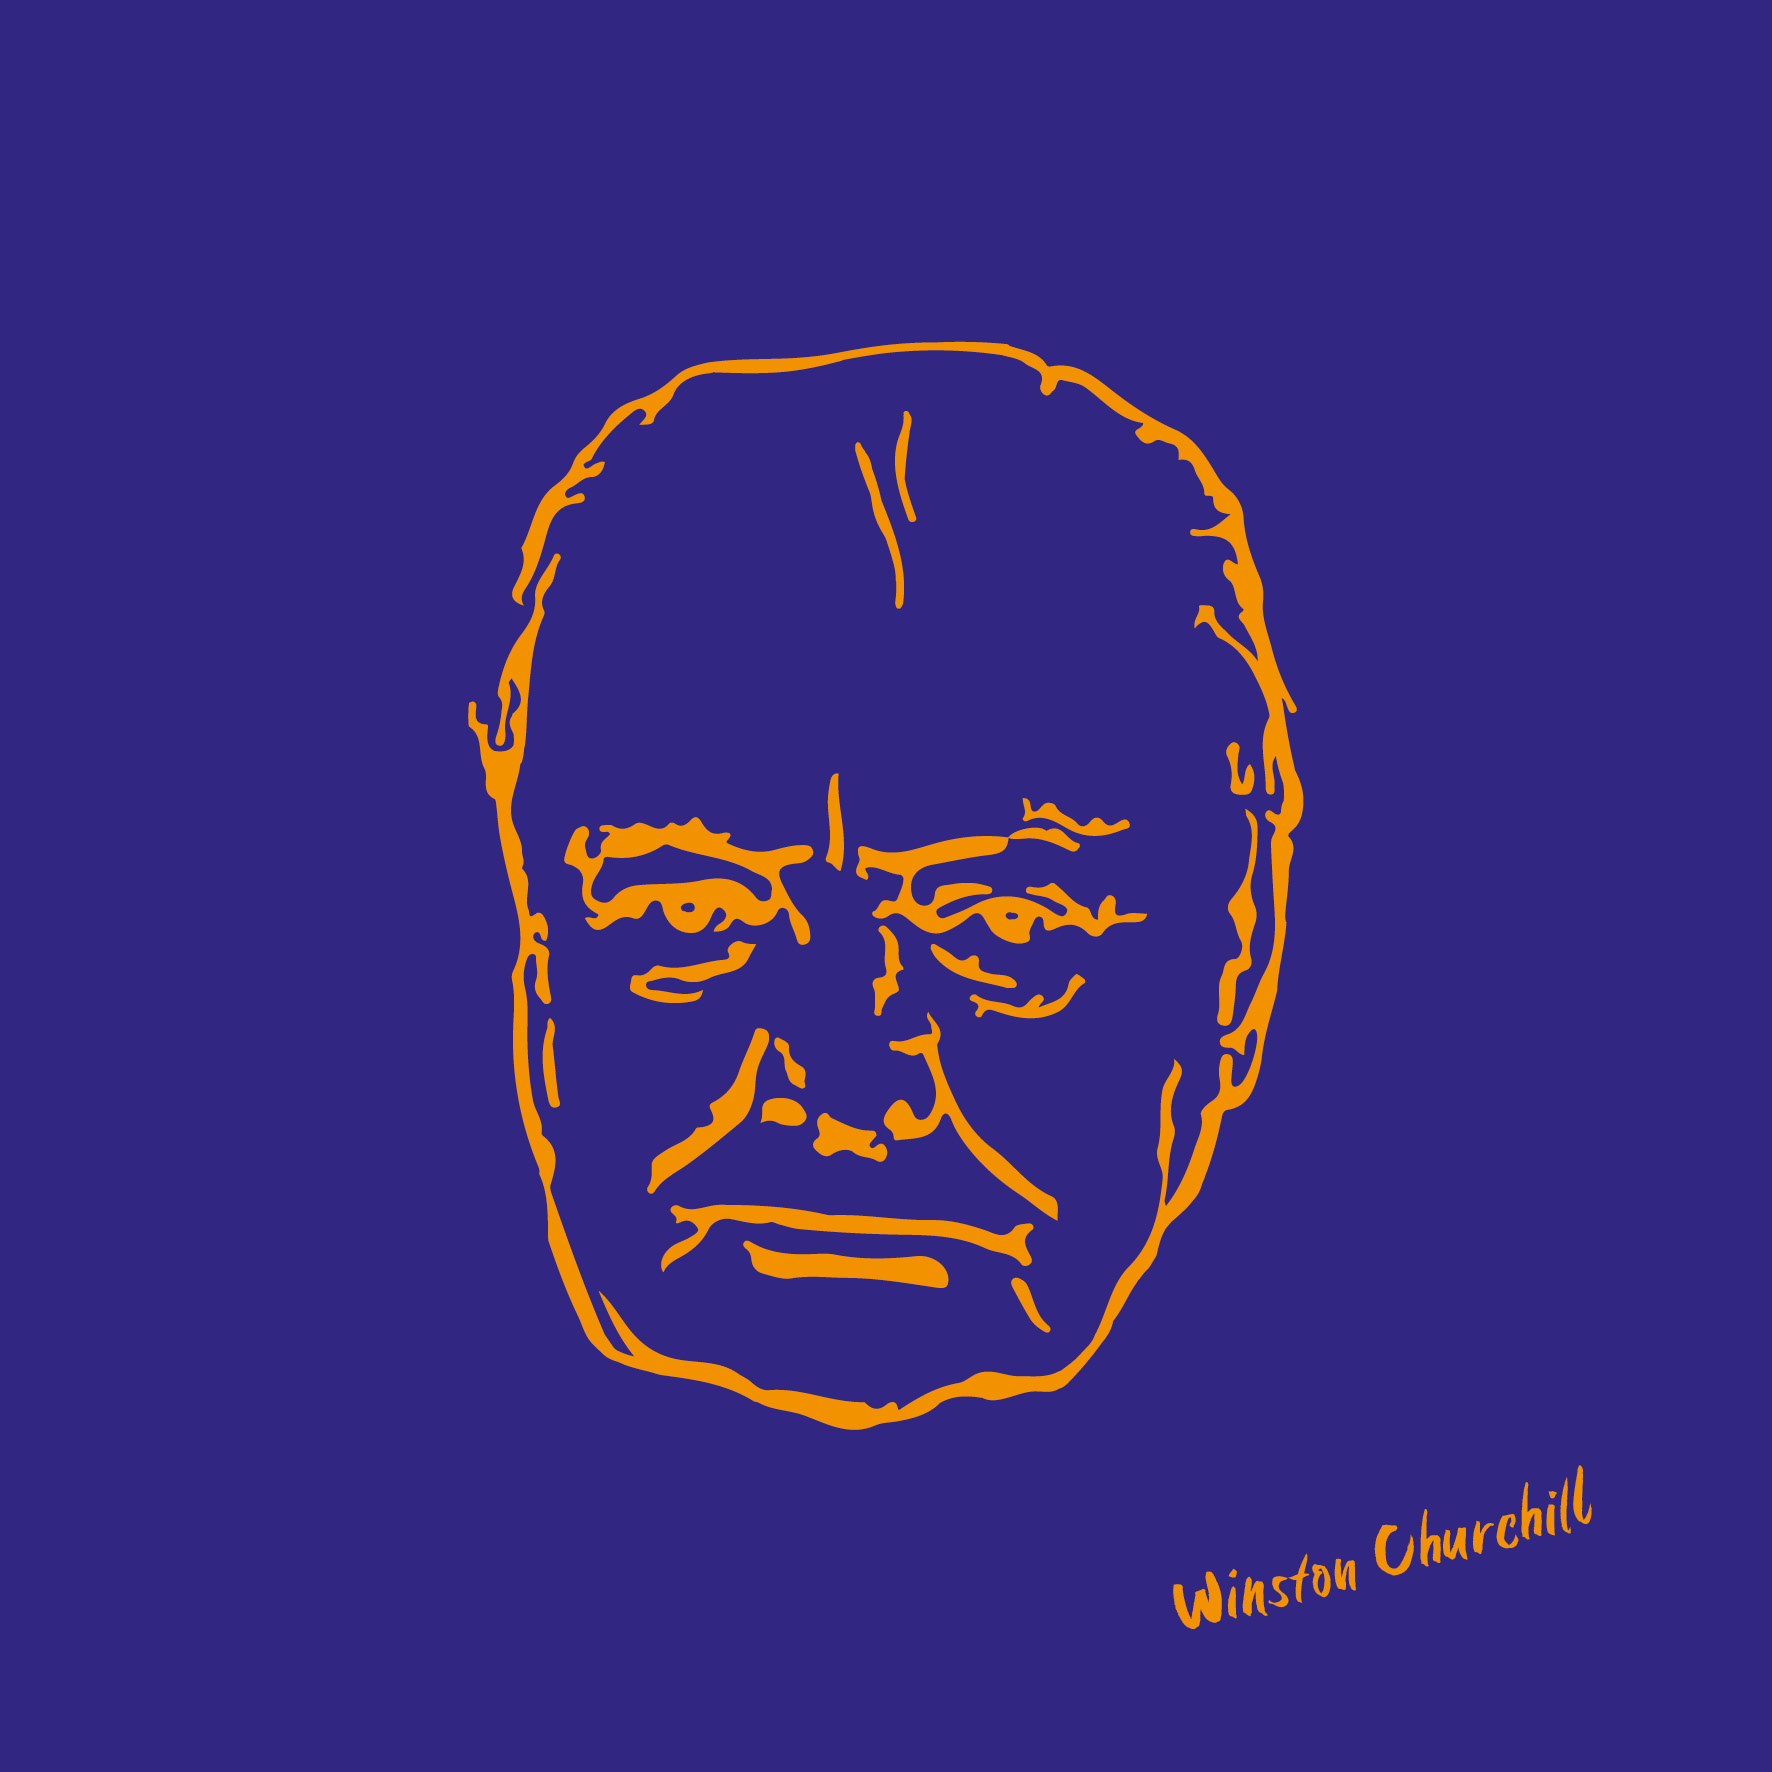 Winston Churchill auf Leinwand, Popart-Stil